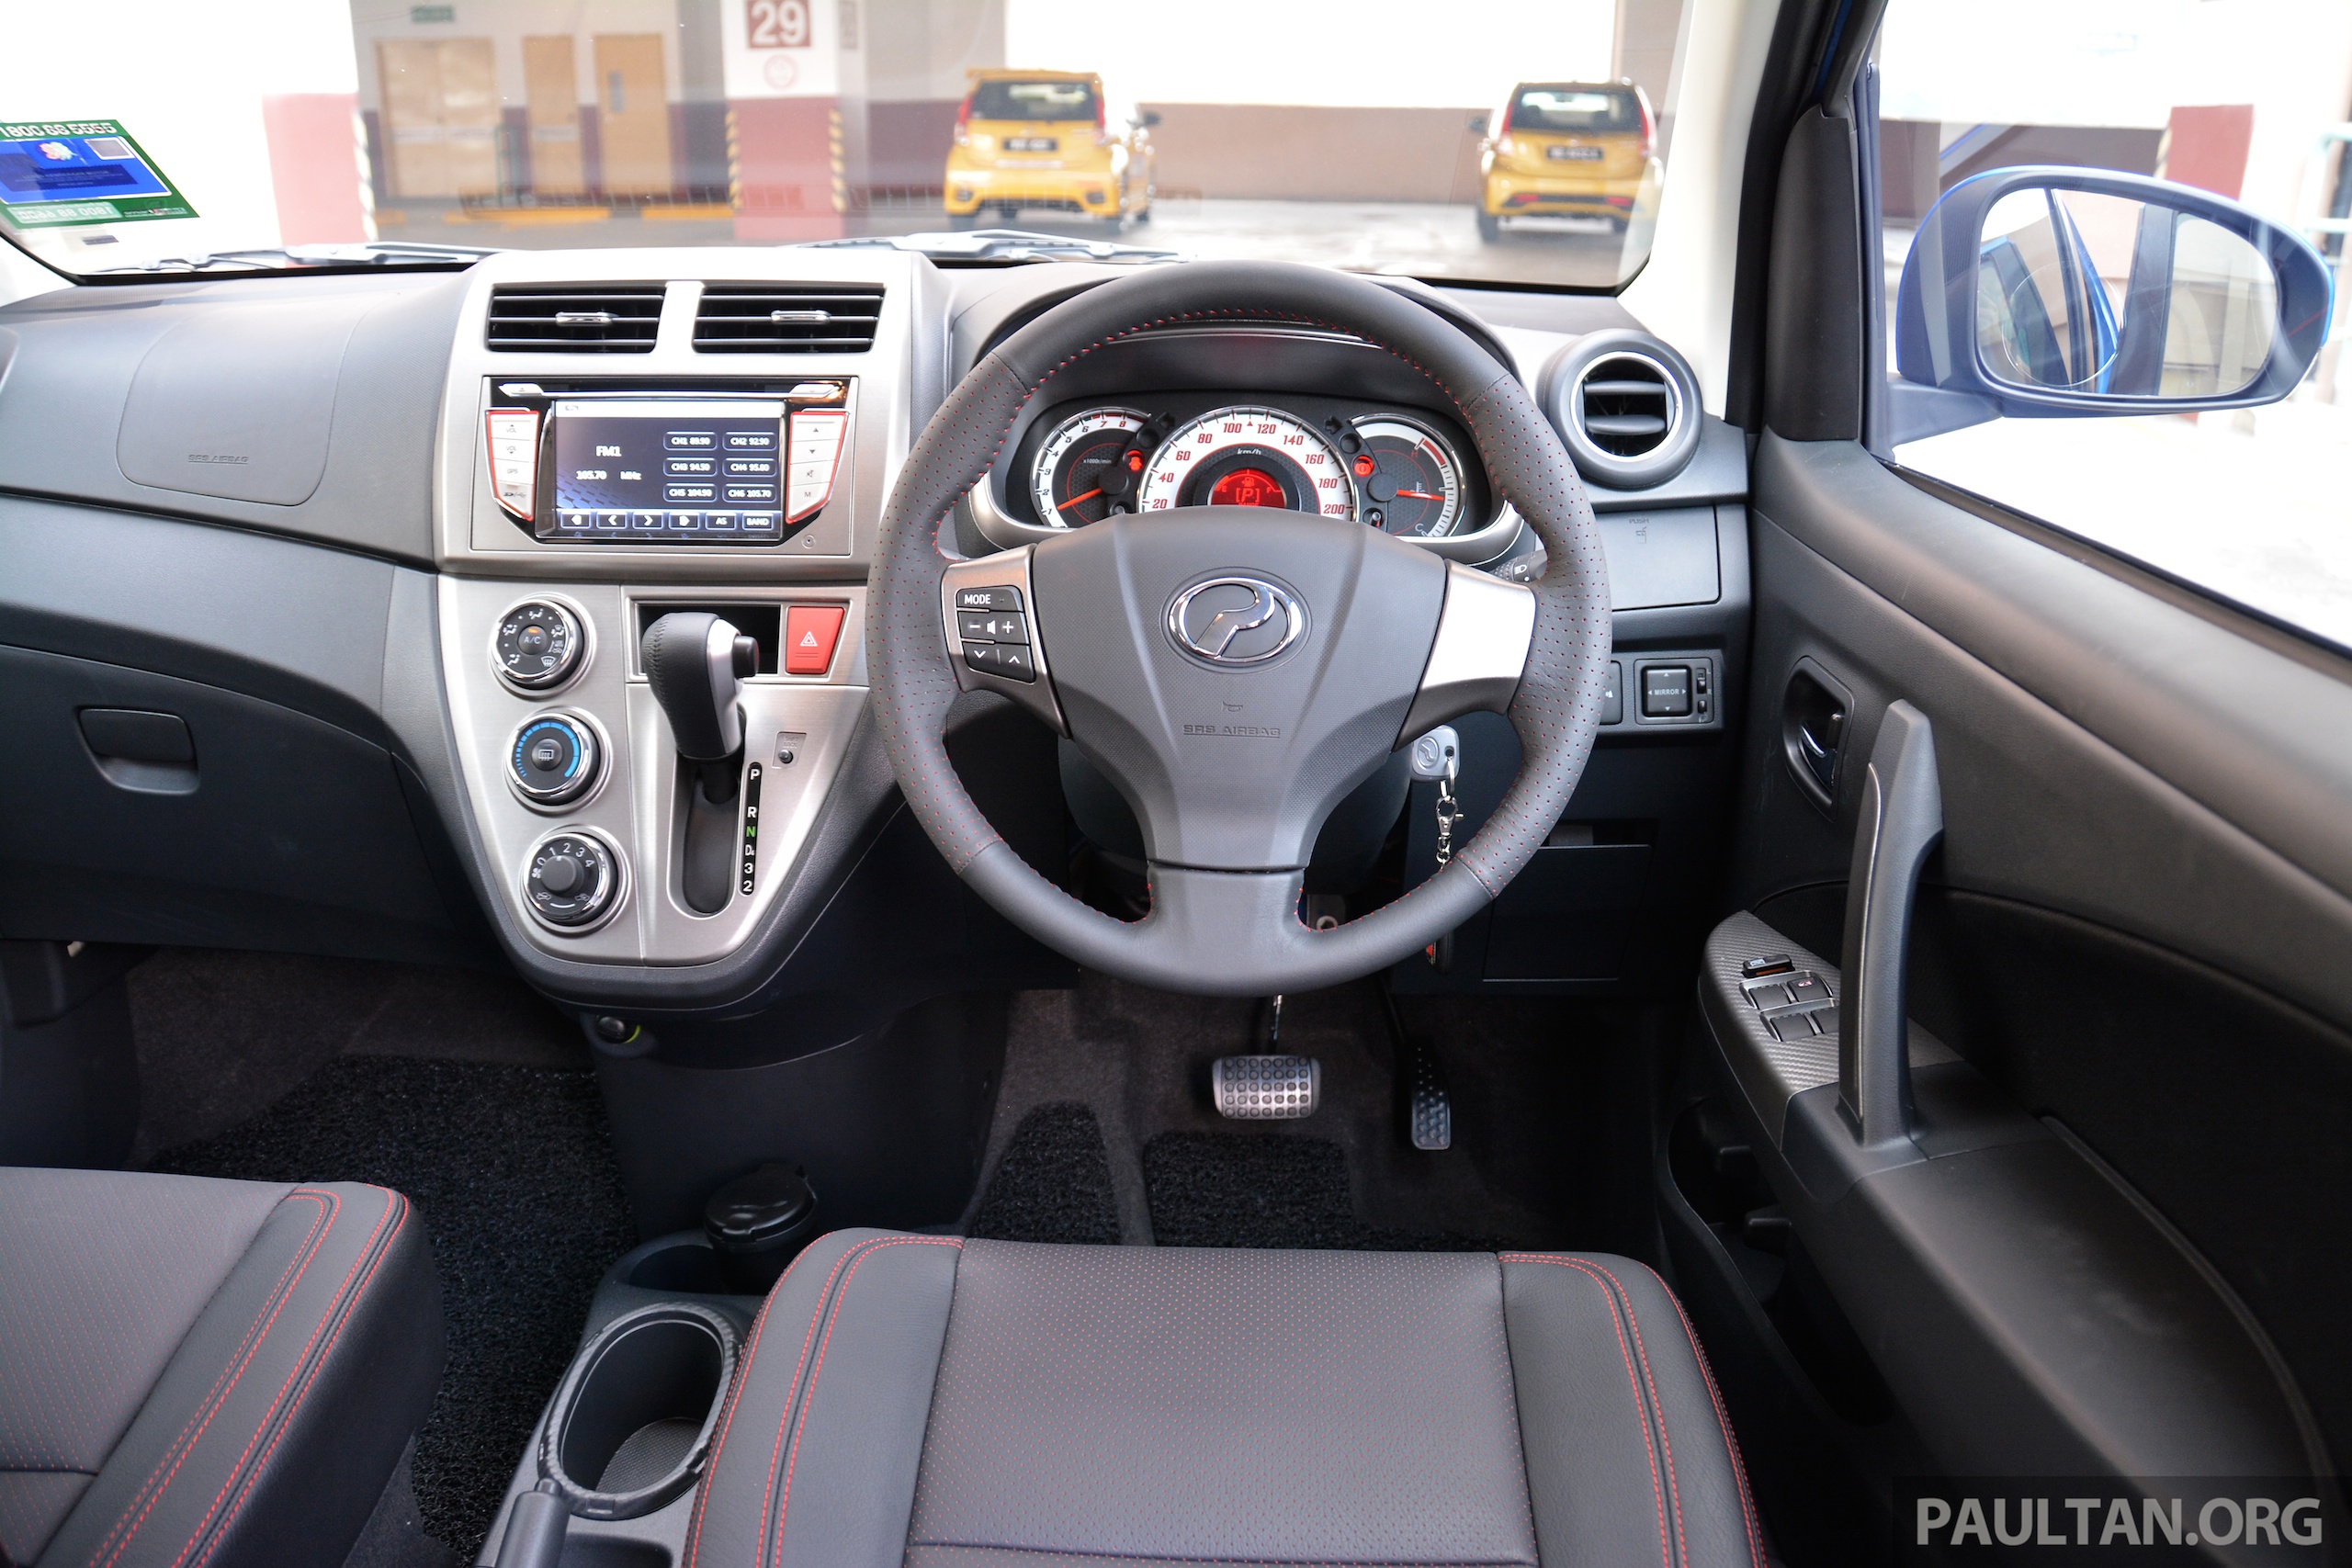 2015 Perodua Myvi – 1.5 Advance vs 1.3 Premium X Image 305024